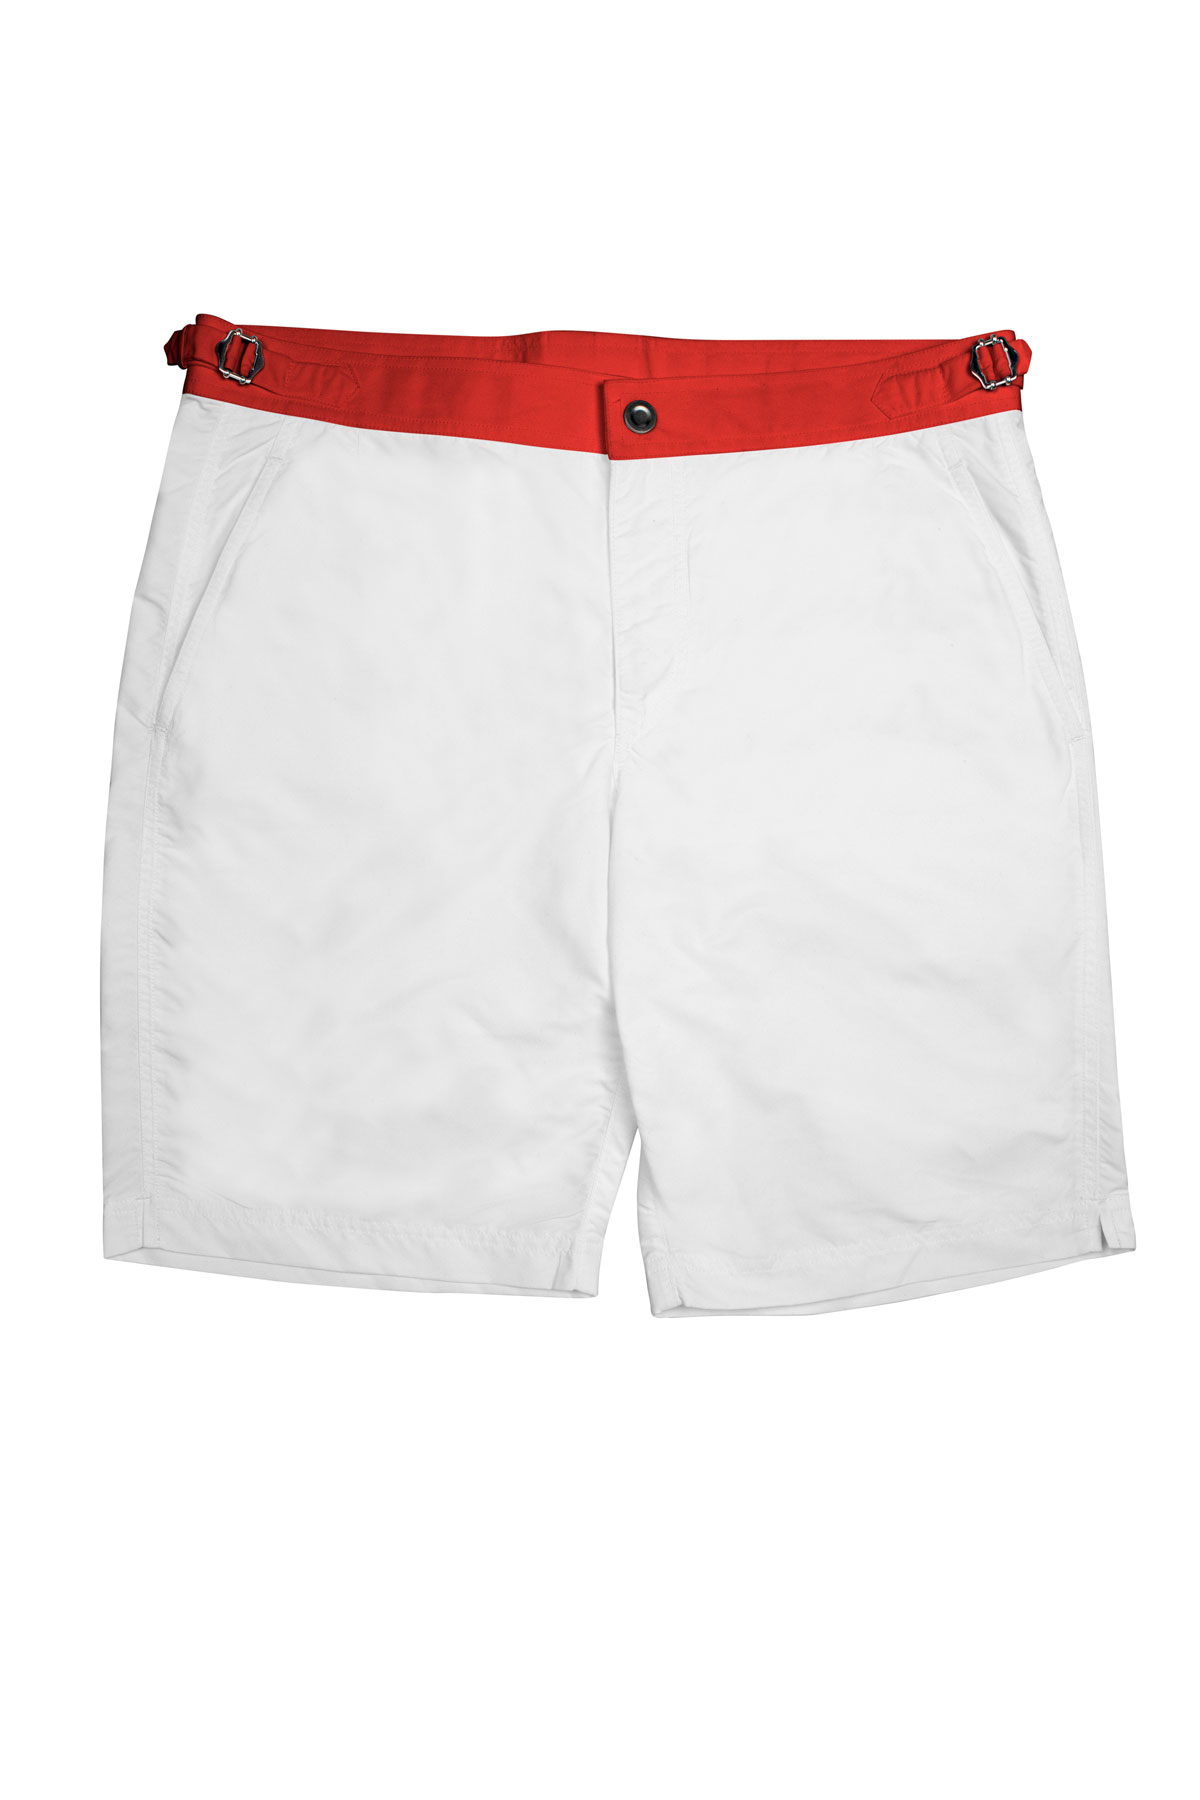 White Swim Shorts w Red Waistband